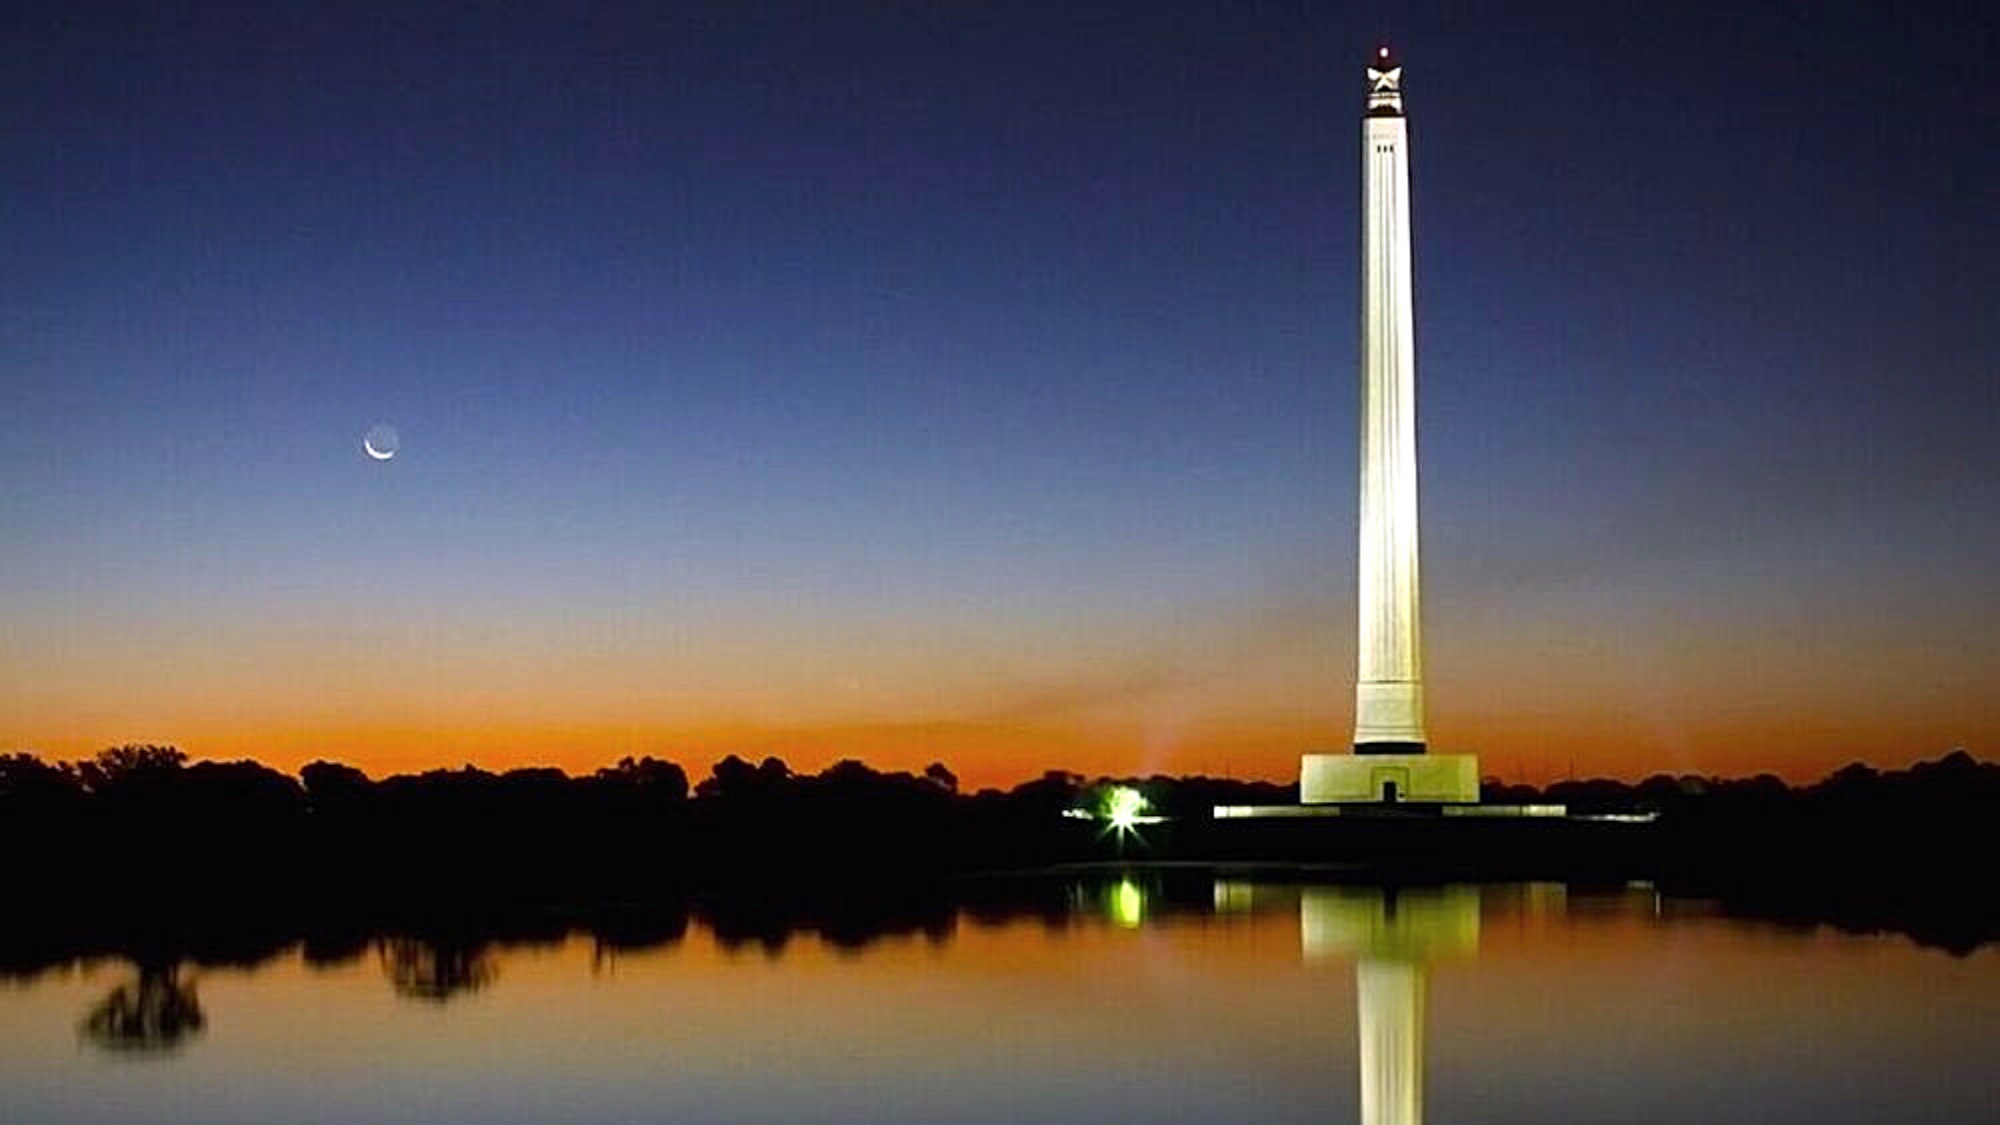 The San Jacinto white stone obelisk at night